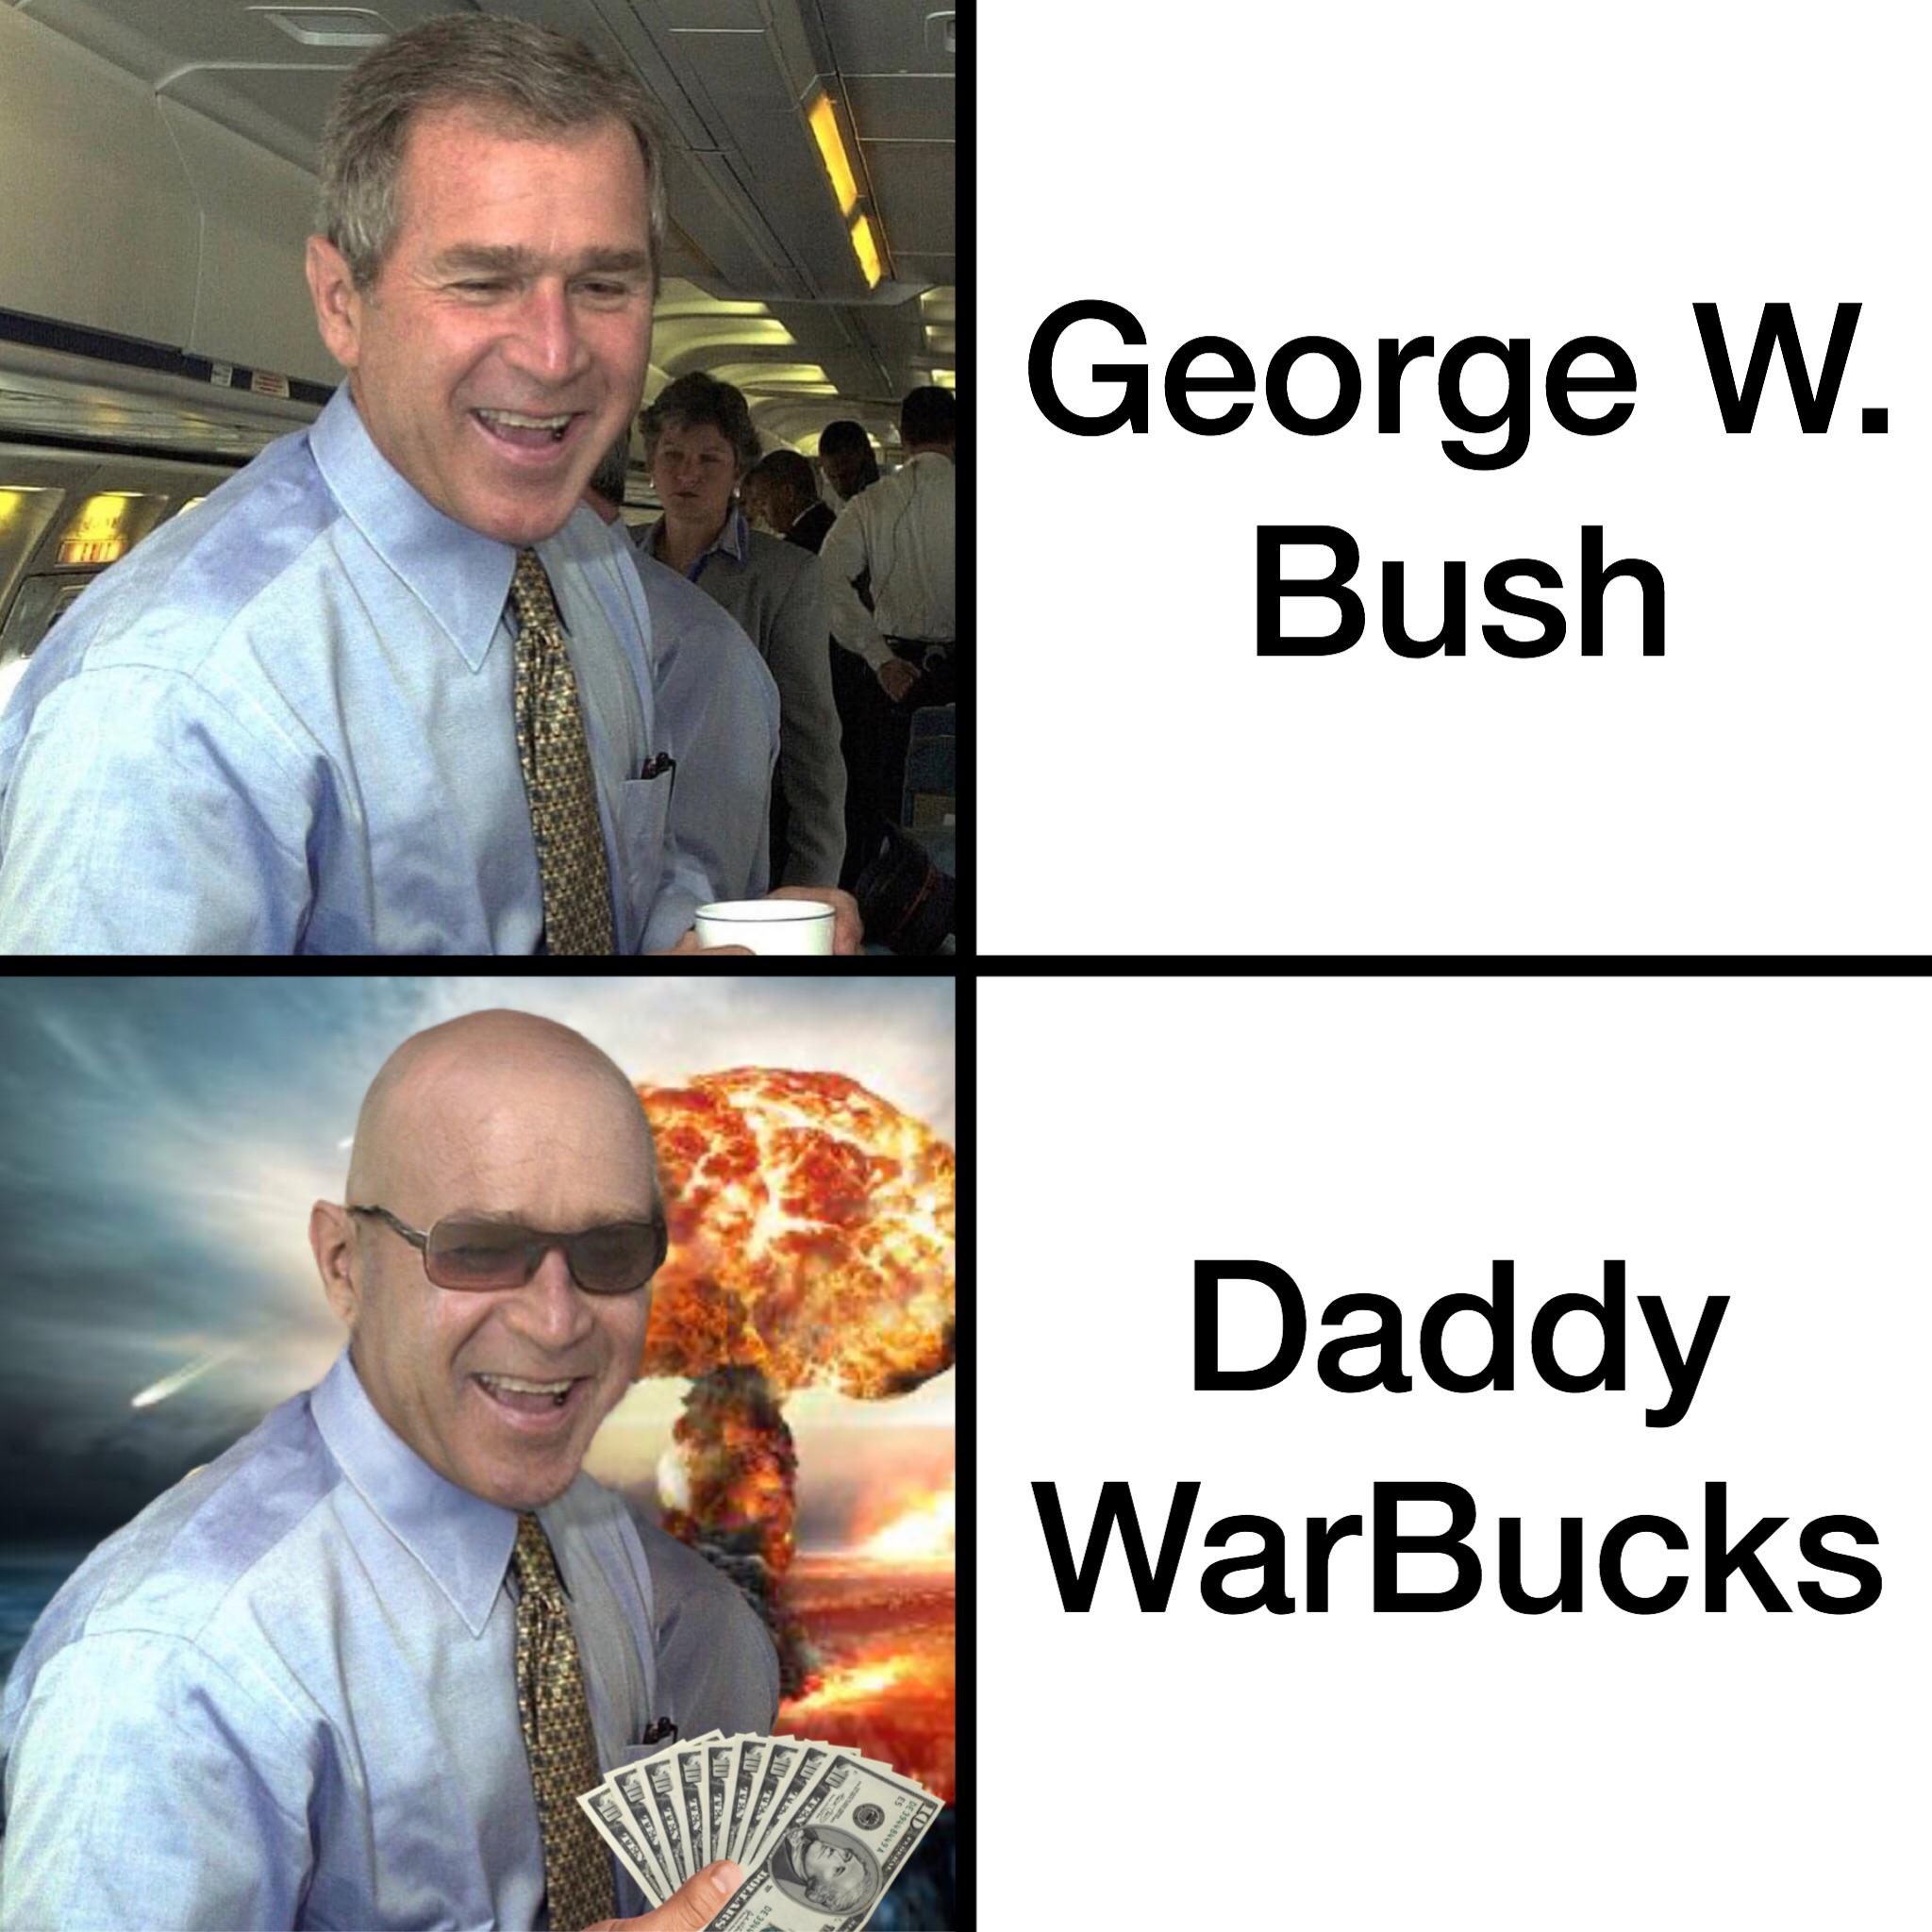 reddit dank memes 2020 - simply soundtracks - George W. Bush Daddy WarBucks De 39 10LX.Ars